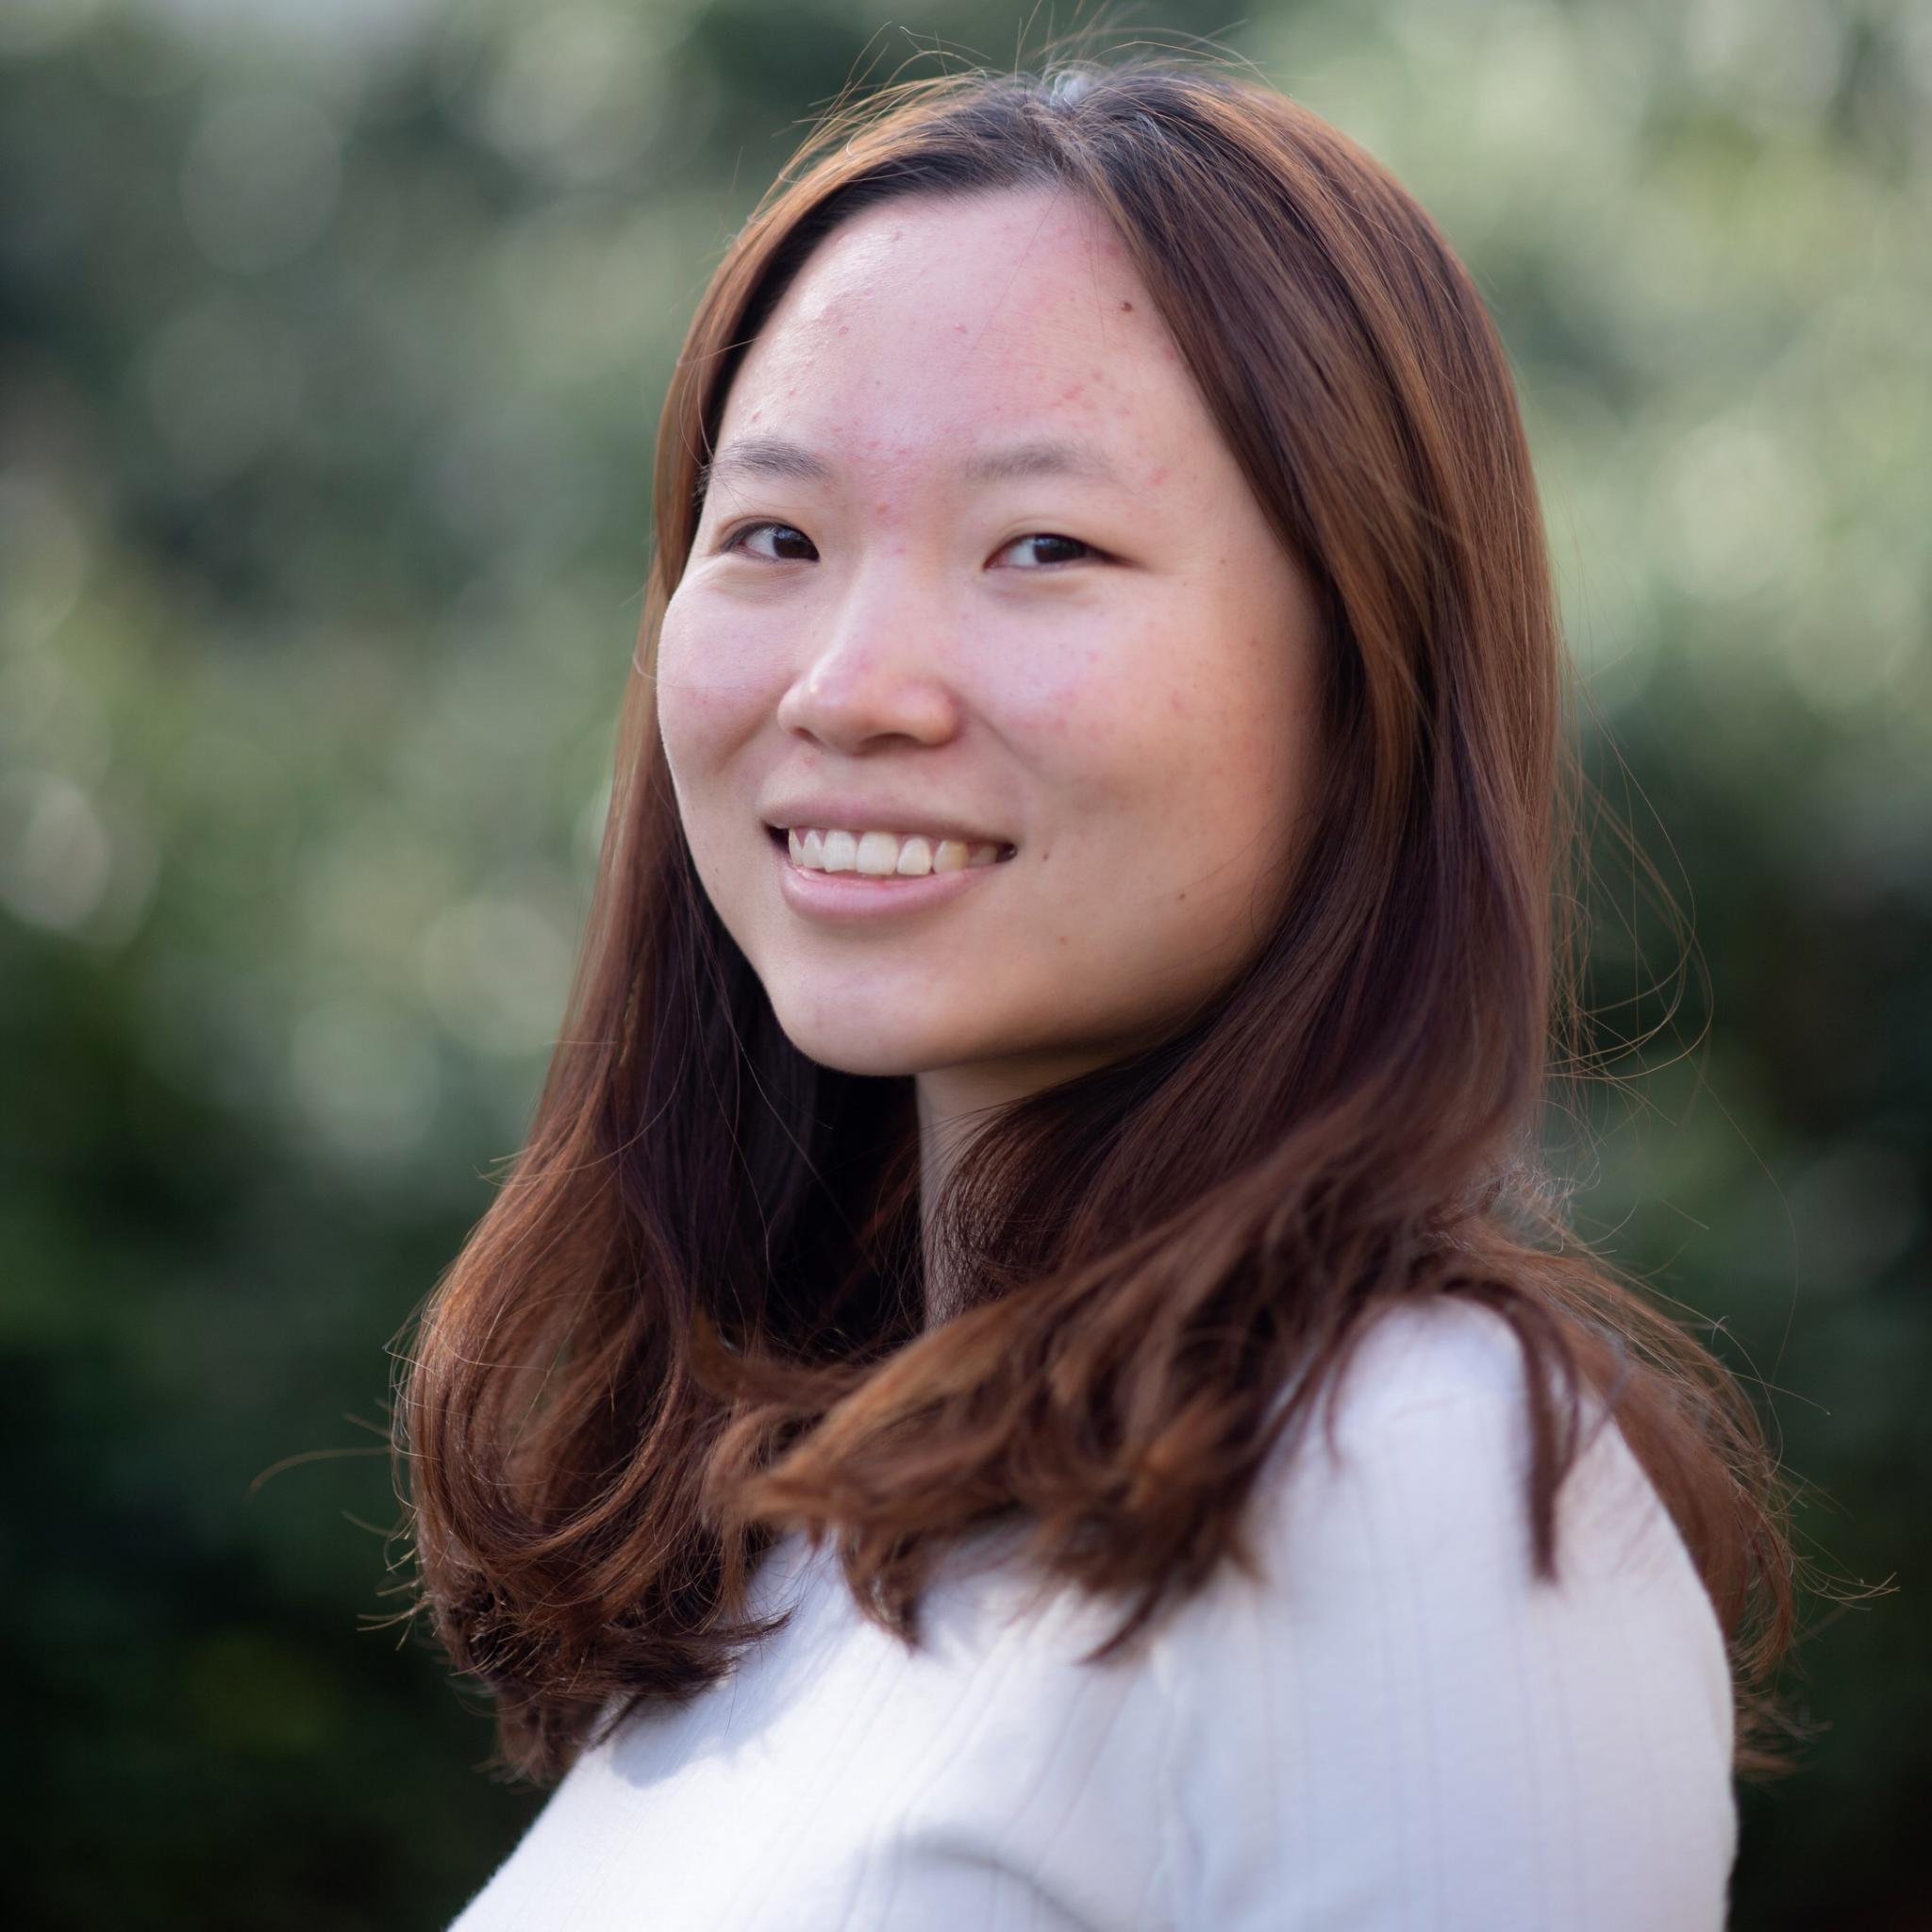 Biophotonics researcher | Engineer | PhD Candidate @ UC Davis